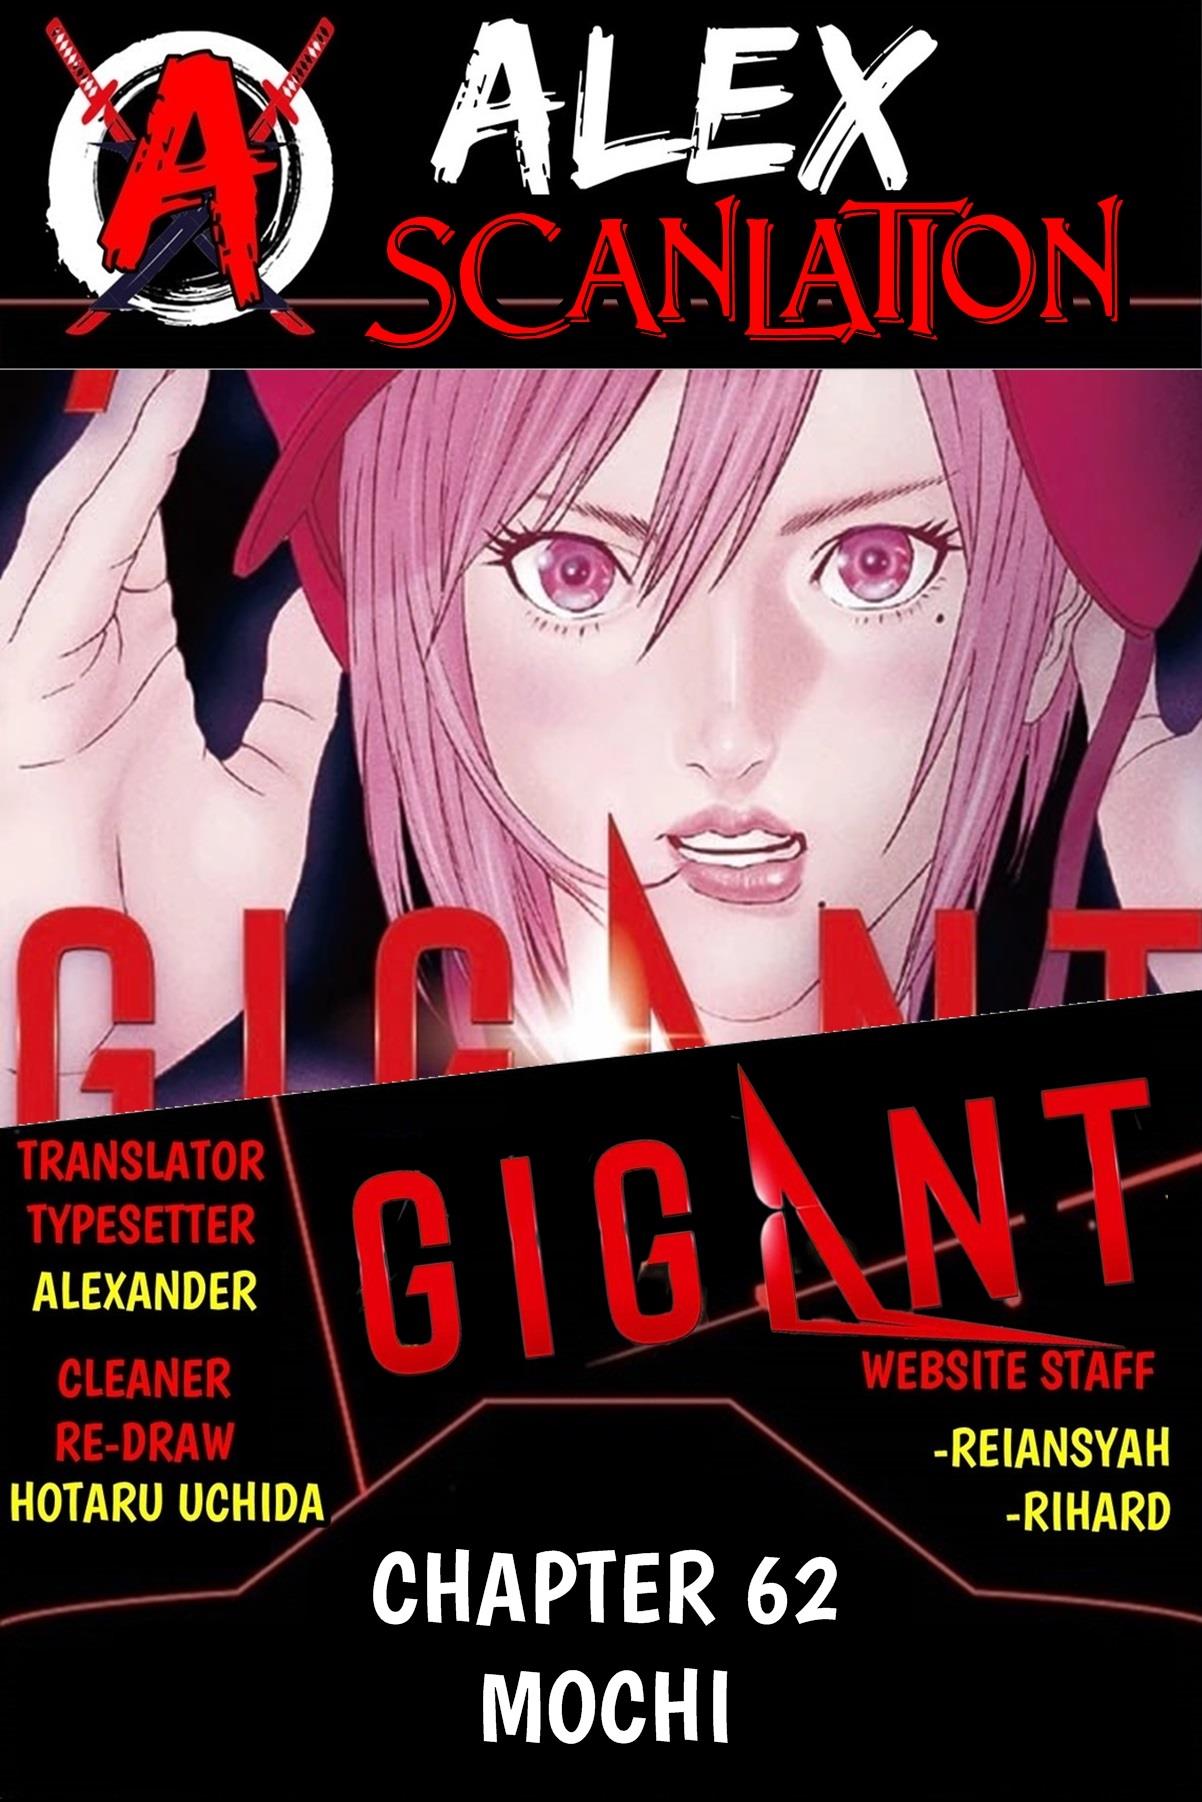 GIGANT Chapter 62